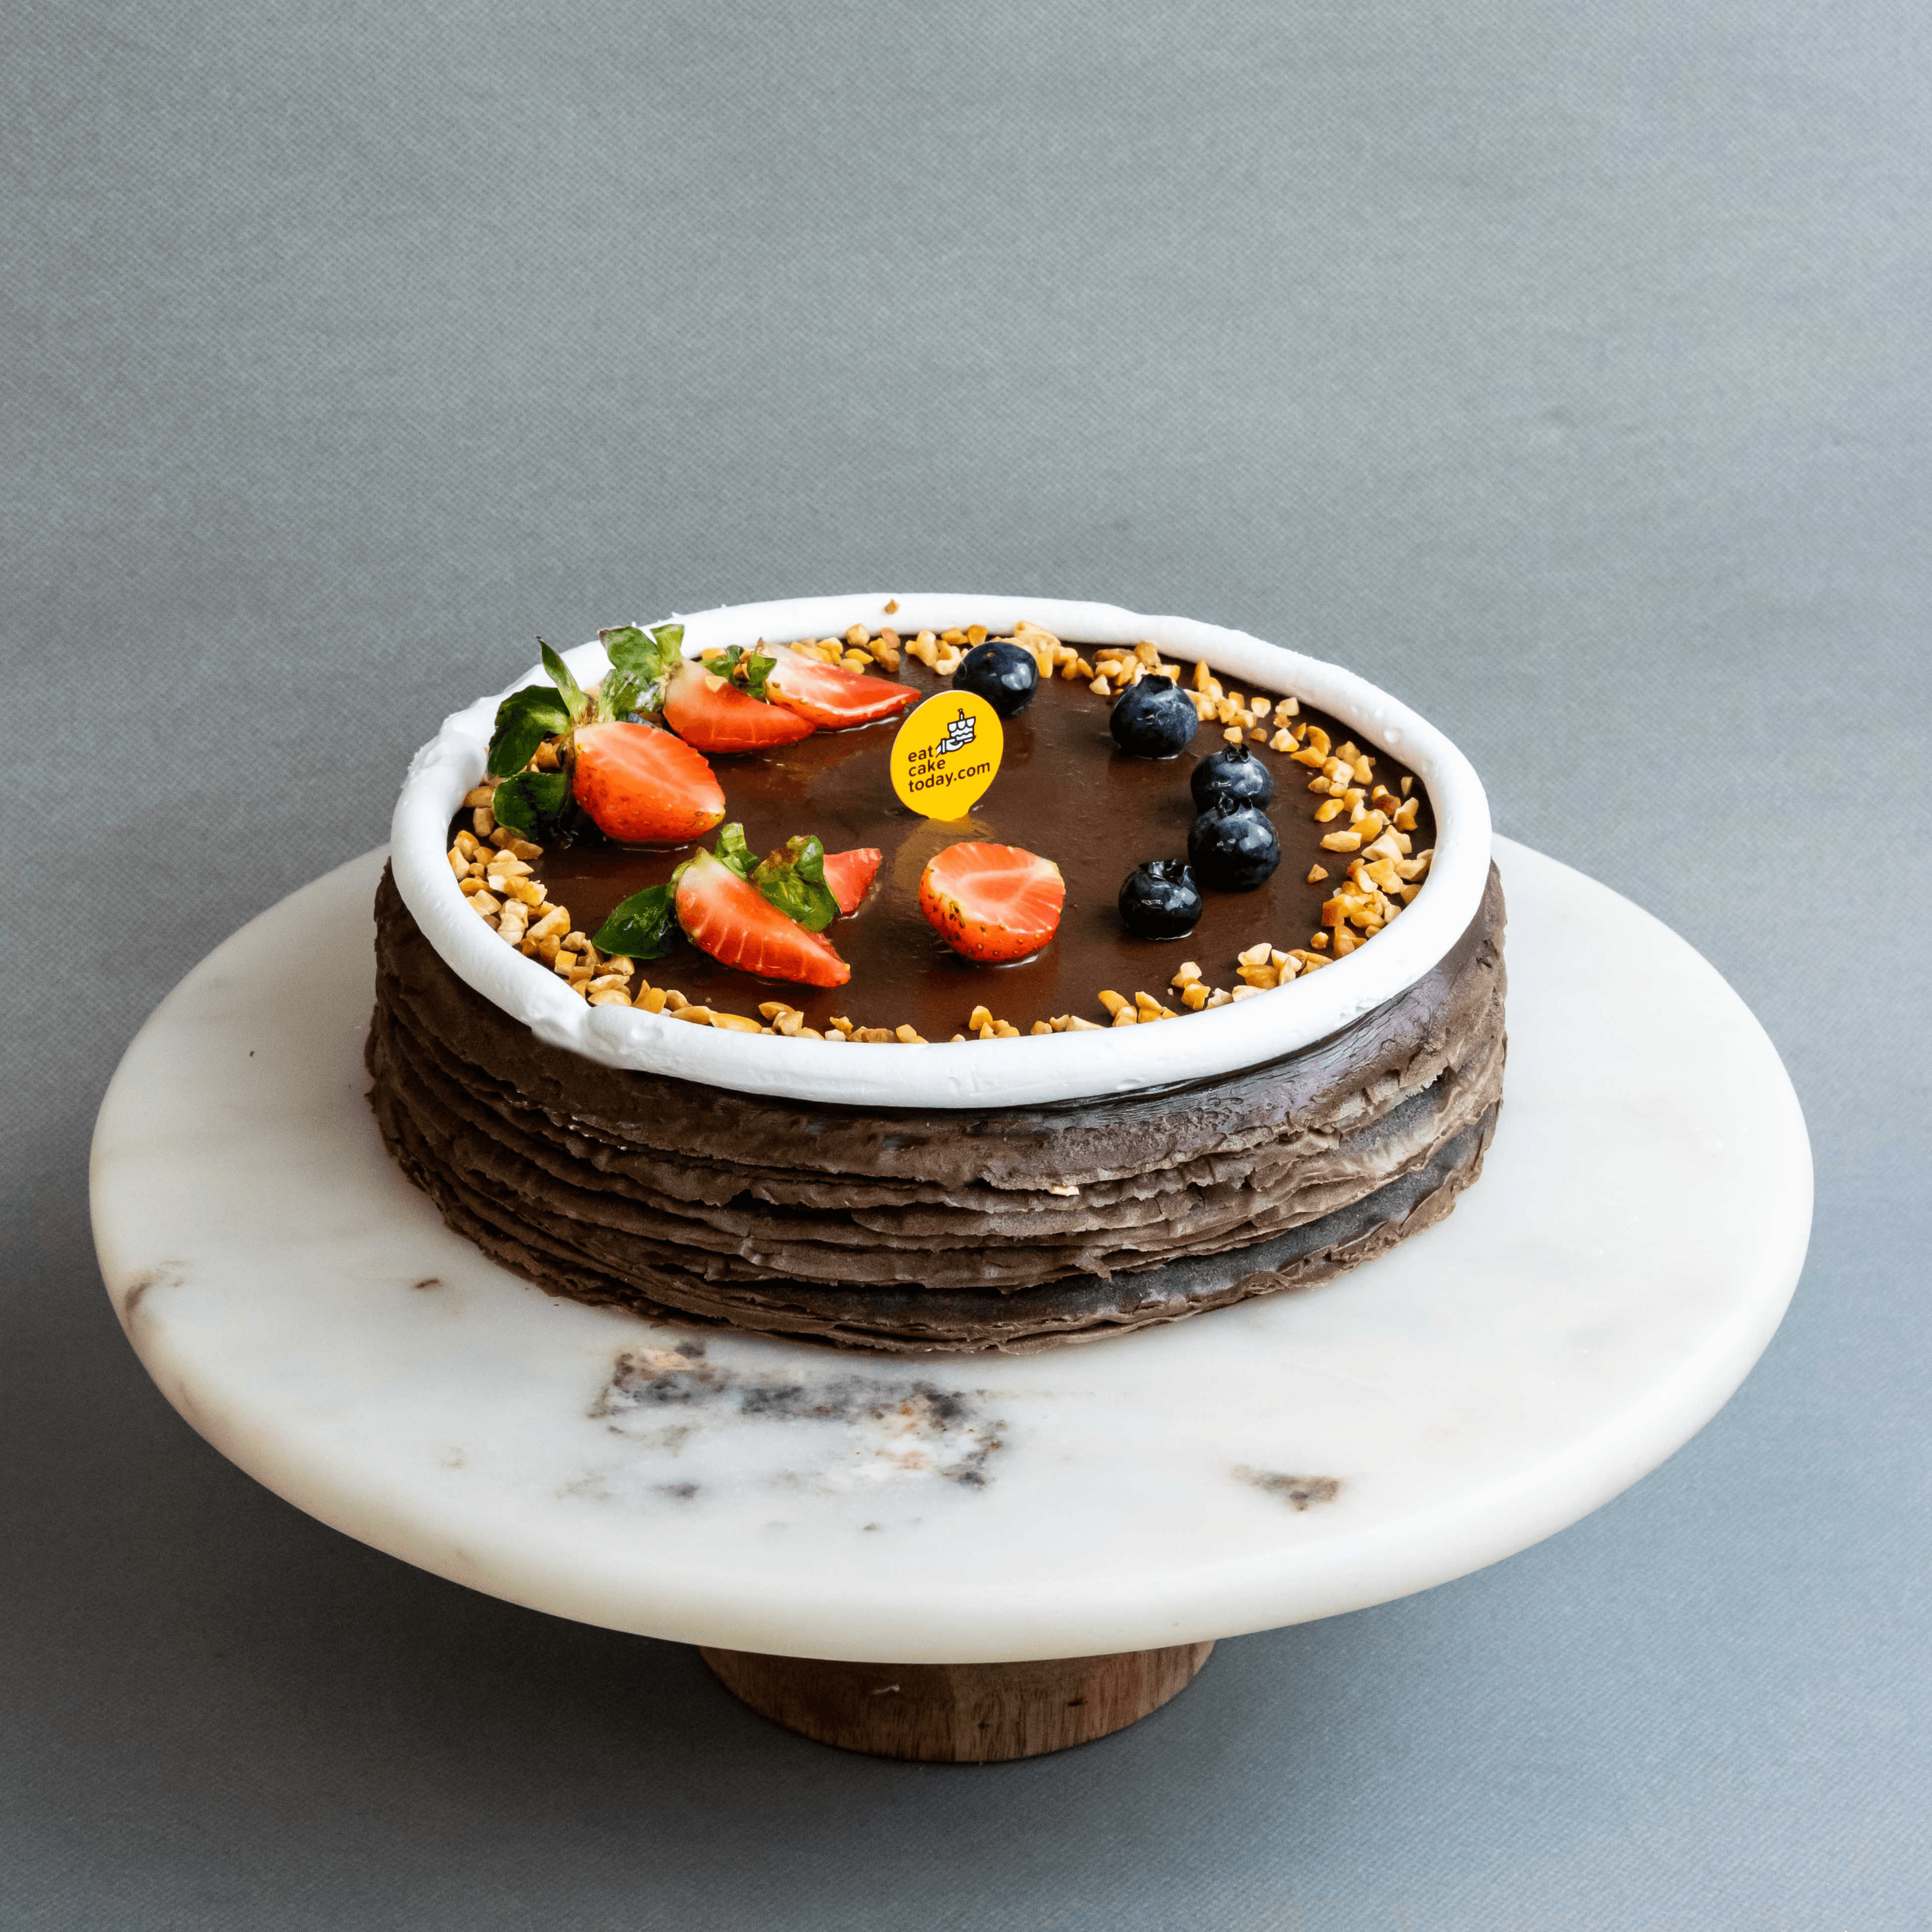 customisedcake | siennylovesdrawing